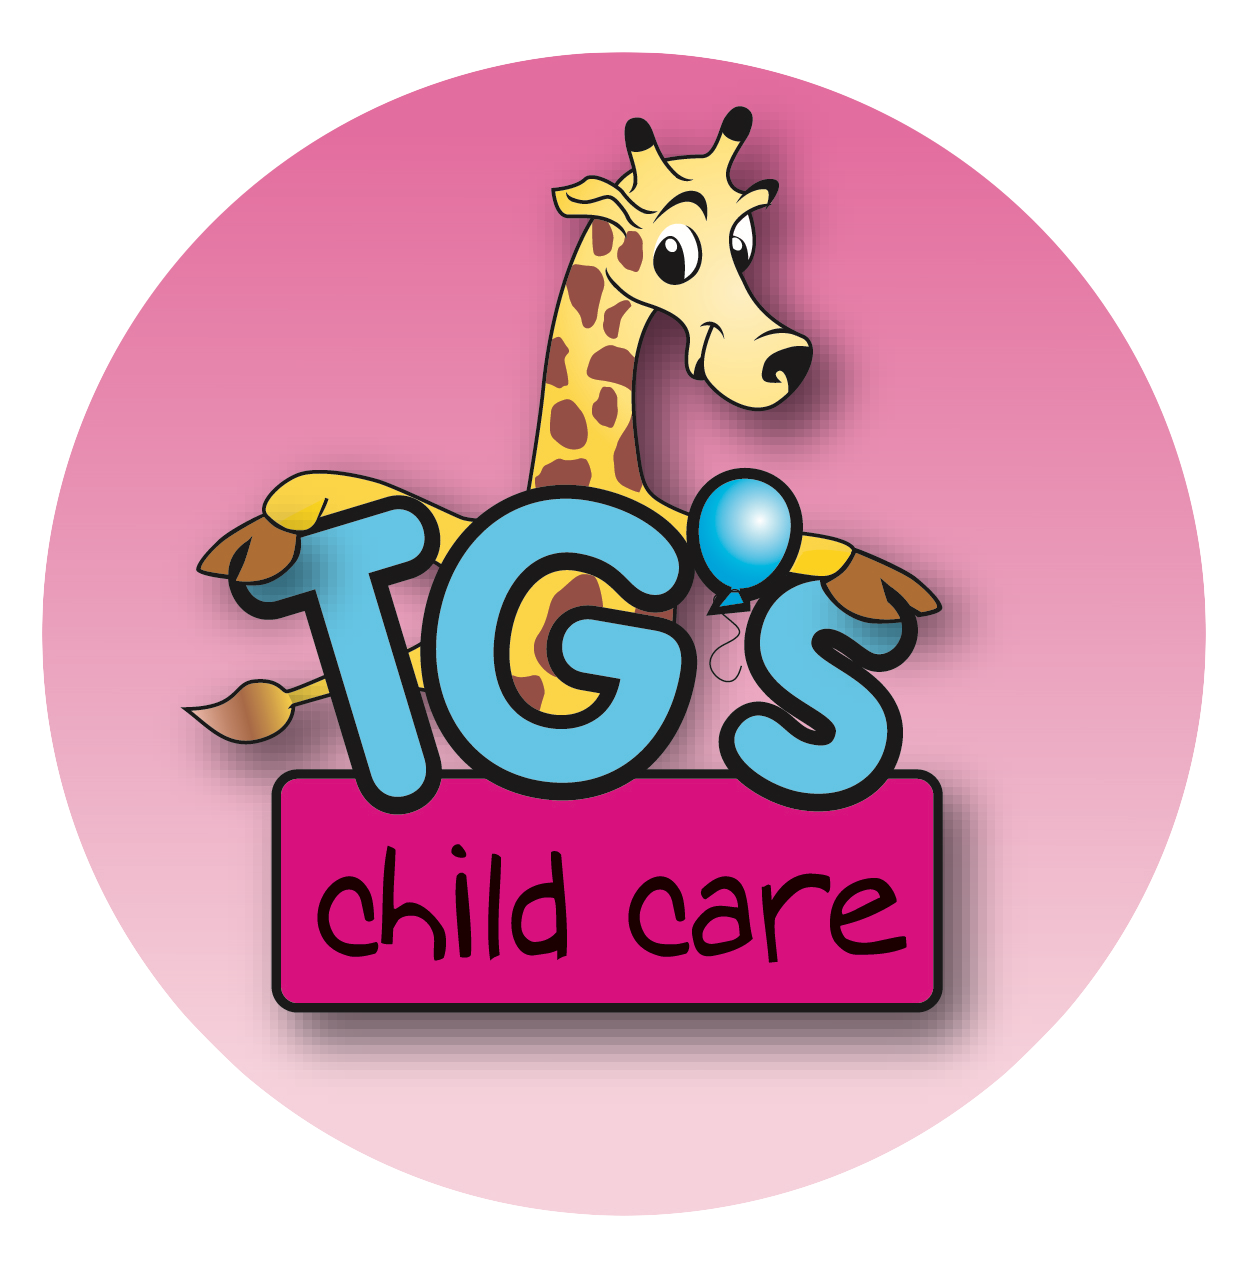 TG’s Child Care